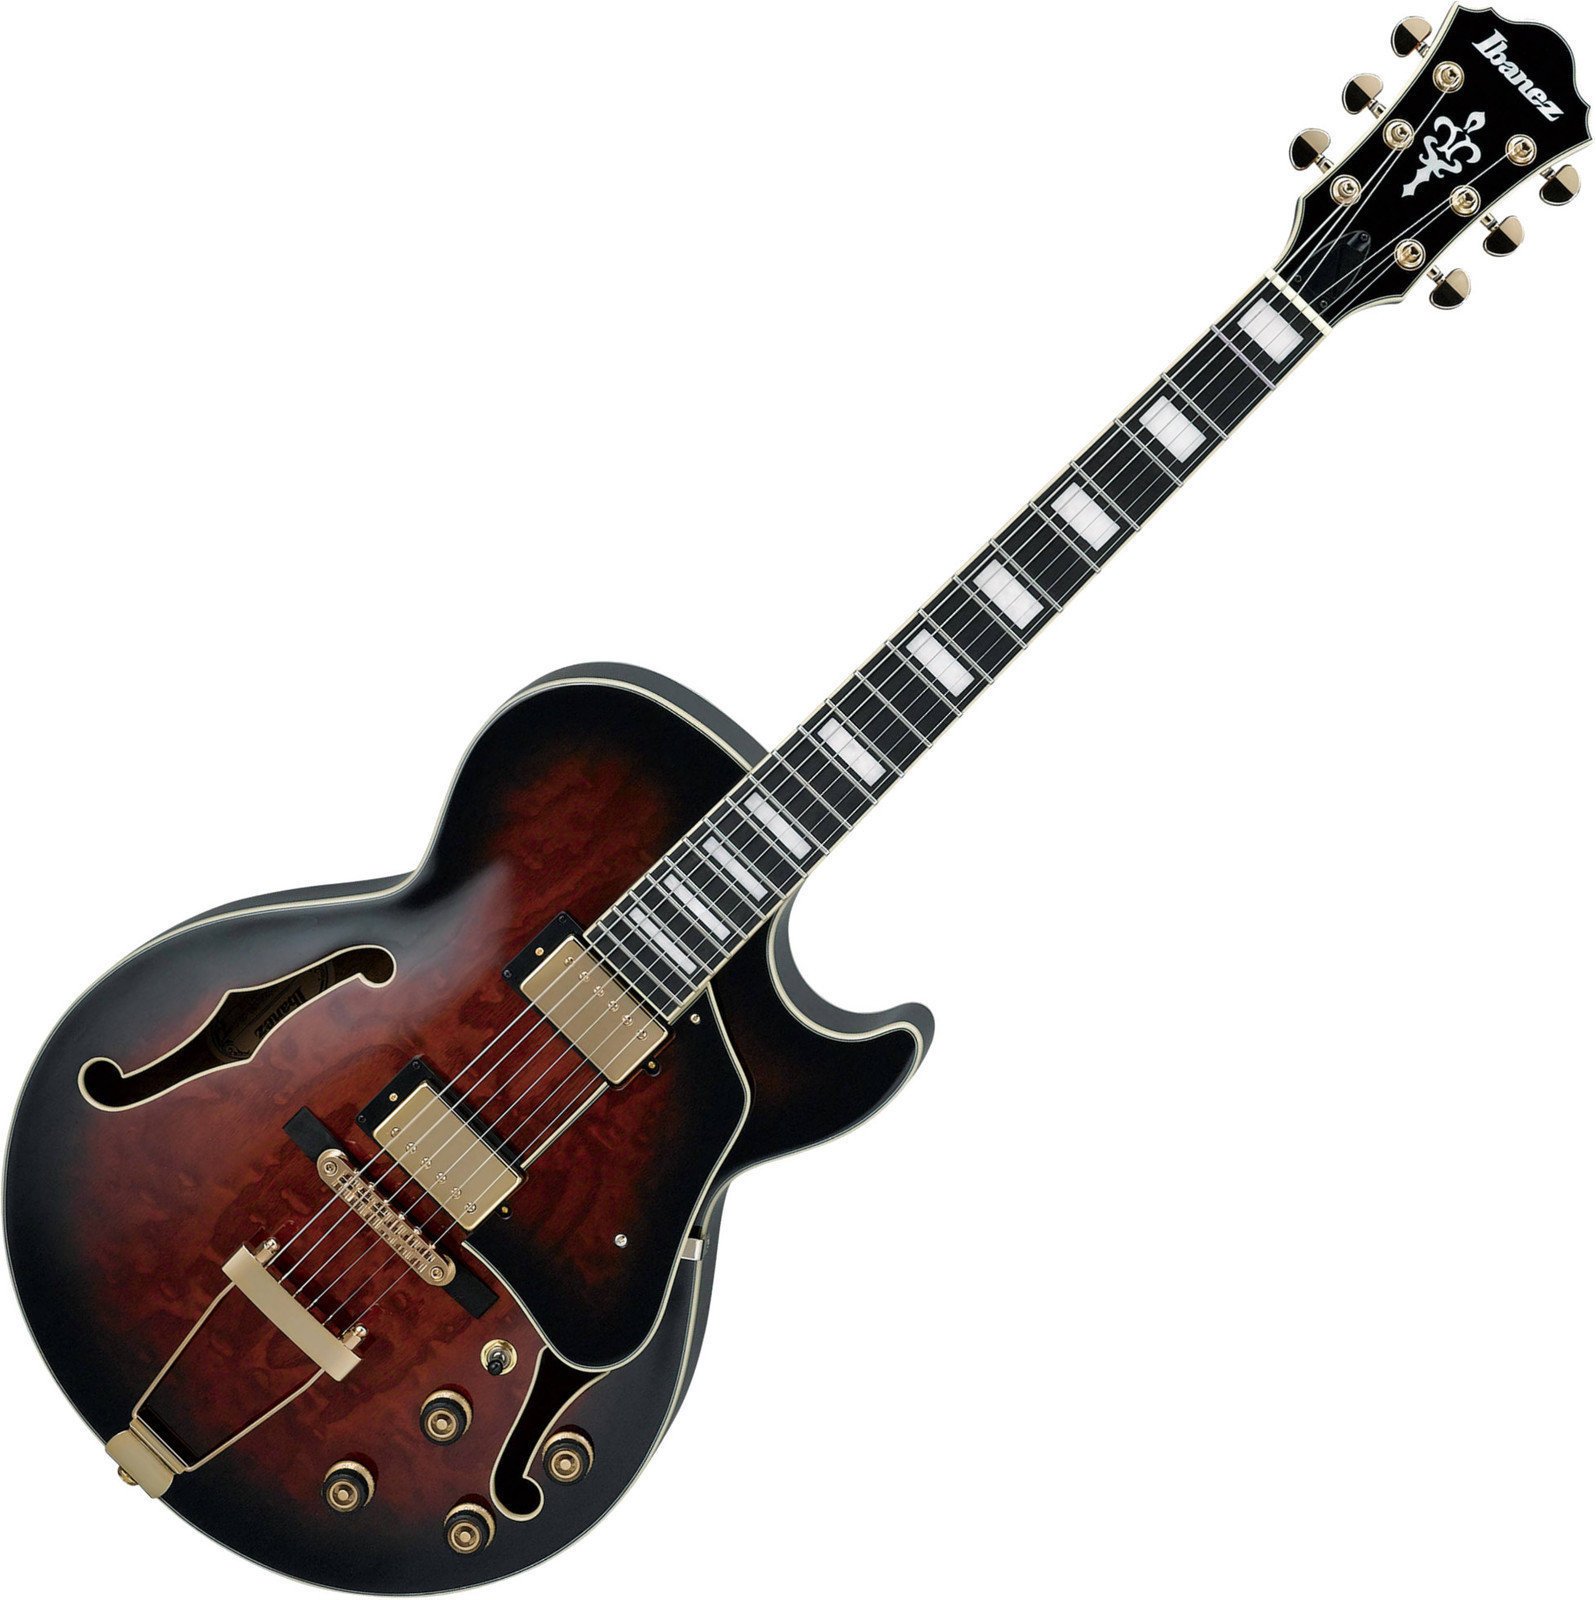 Gitara semi-akustyczna Ibanez AG95QA-DBS Dark Brown Sunburst